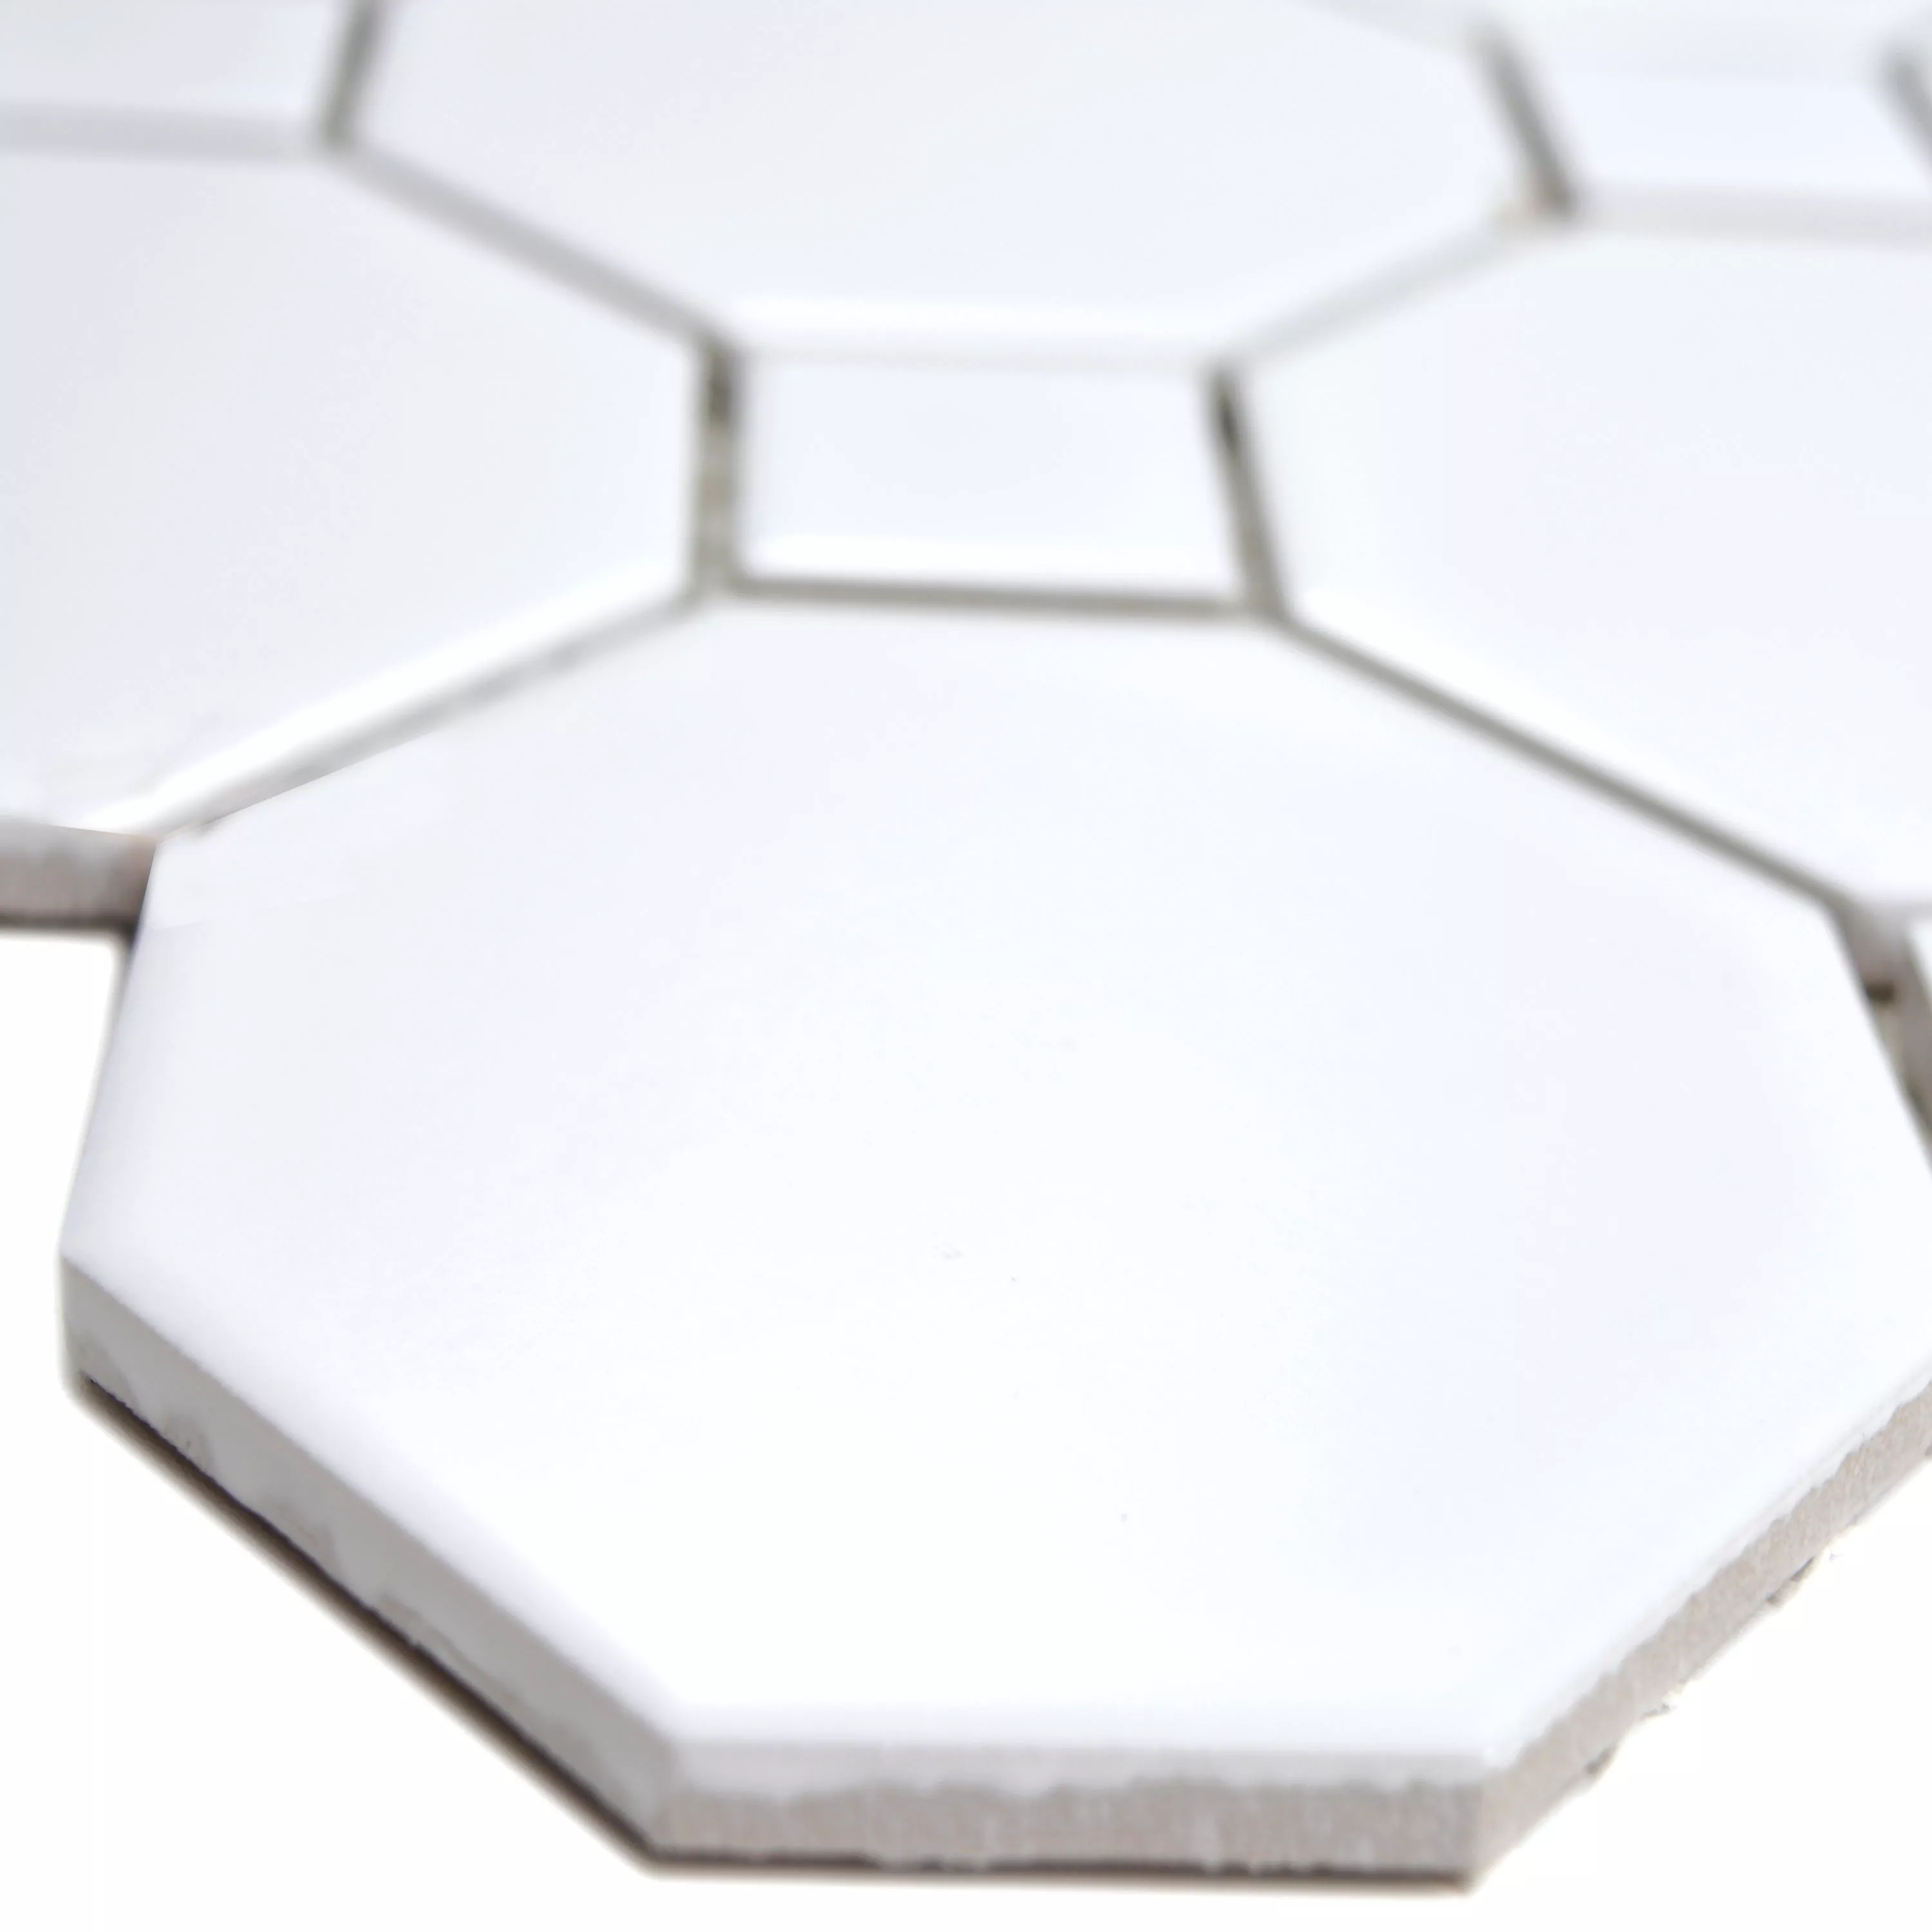 Sample Ceramic Mosaic Tiles Octagon Fürstenberg Blanc